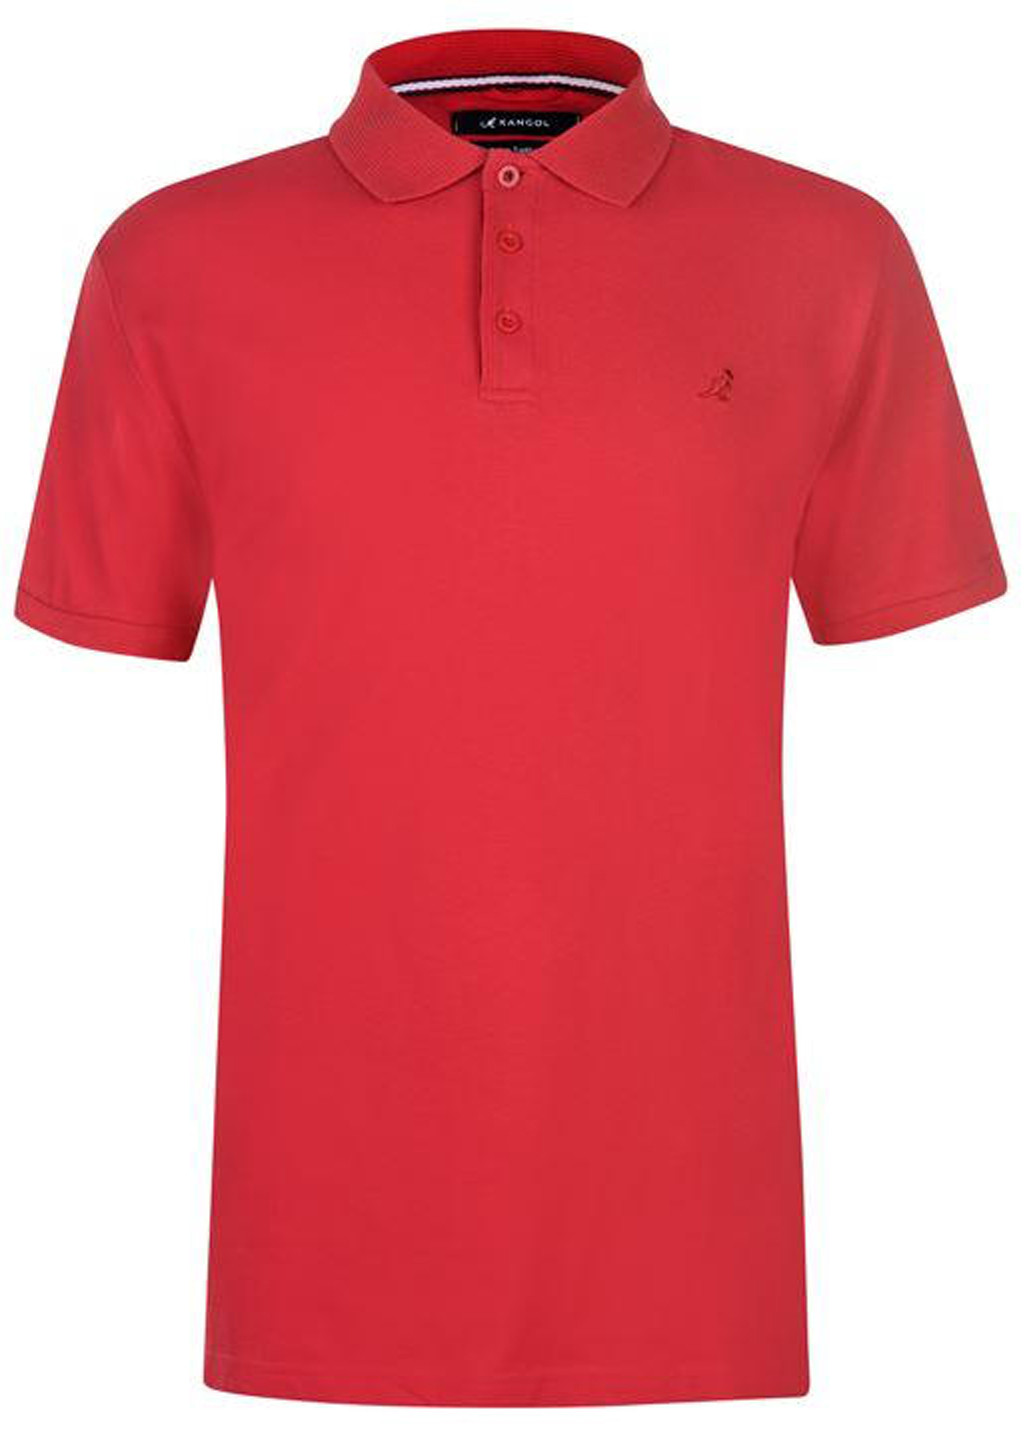 Красная футболка-поло для мужчин Kangol однотонная